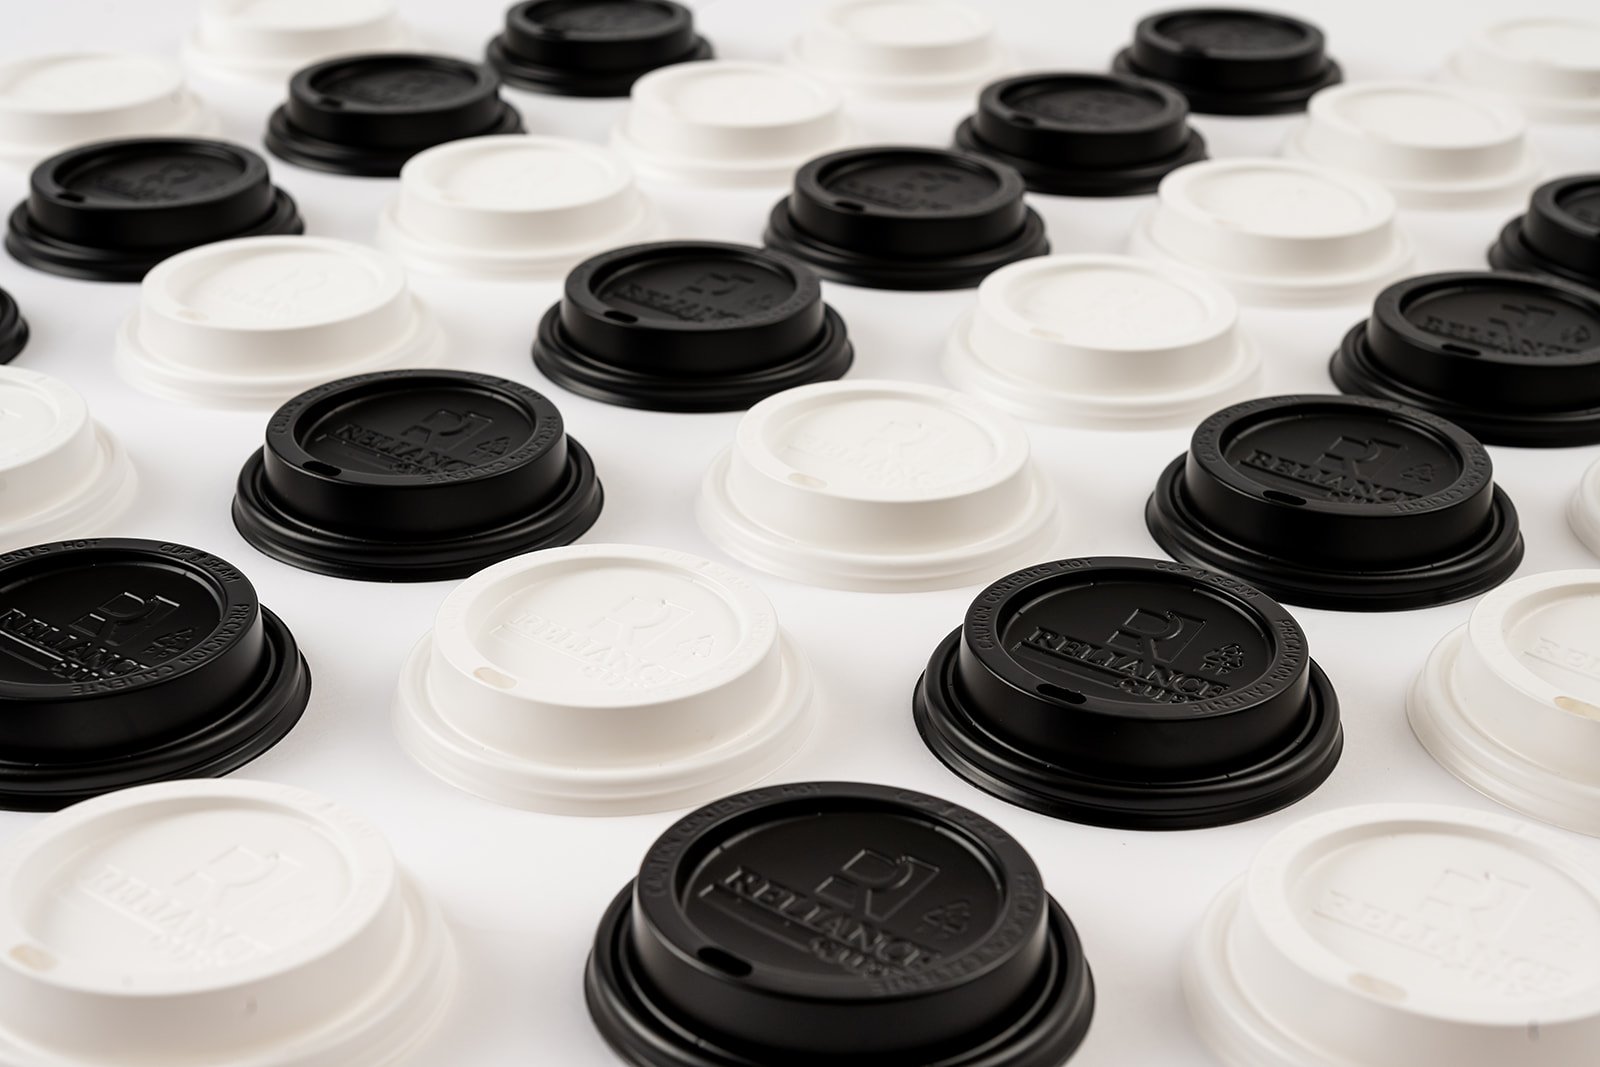 Reliance Hot Cup lids